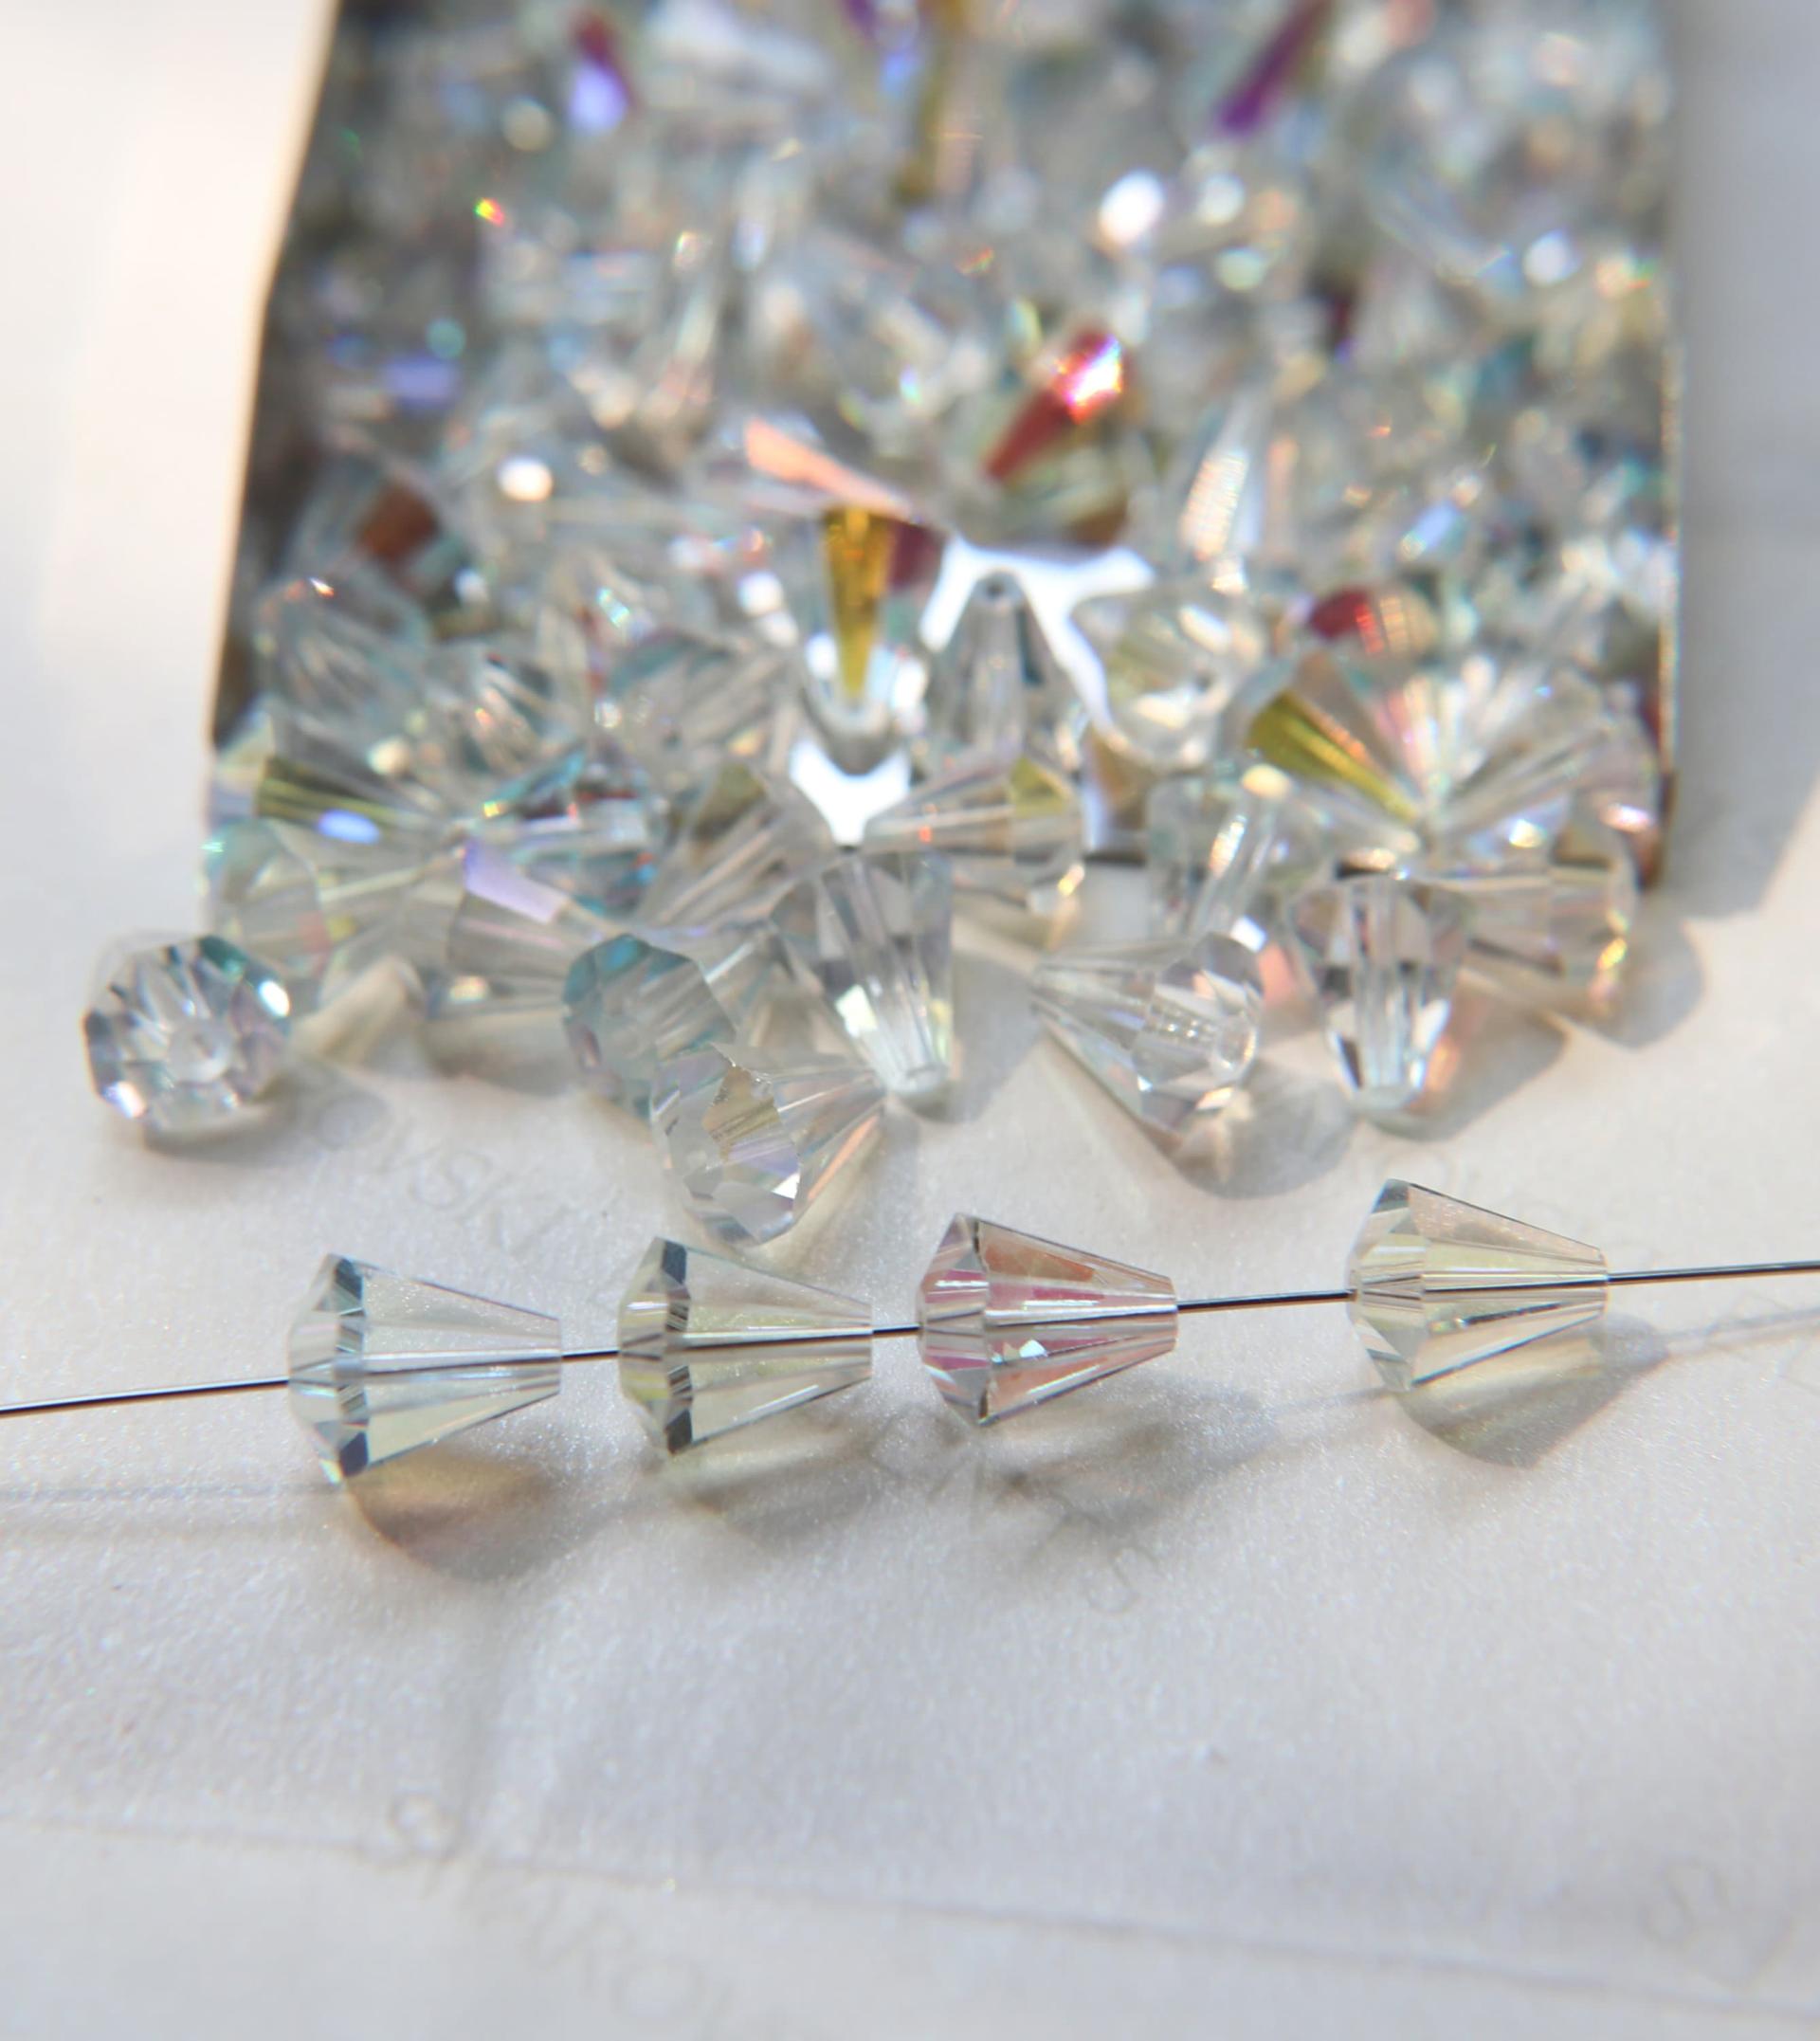 5400 Vintage 9x8 mm Swarovski crystal bead cone shape Crystal Aurore  Boreale Swarovski Elements 2/6/12/36 Pieces, jewelry making